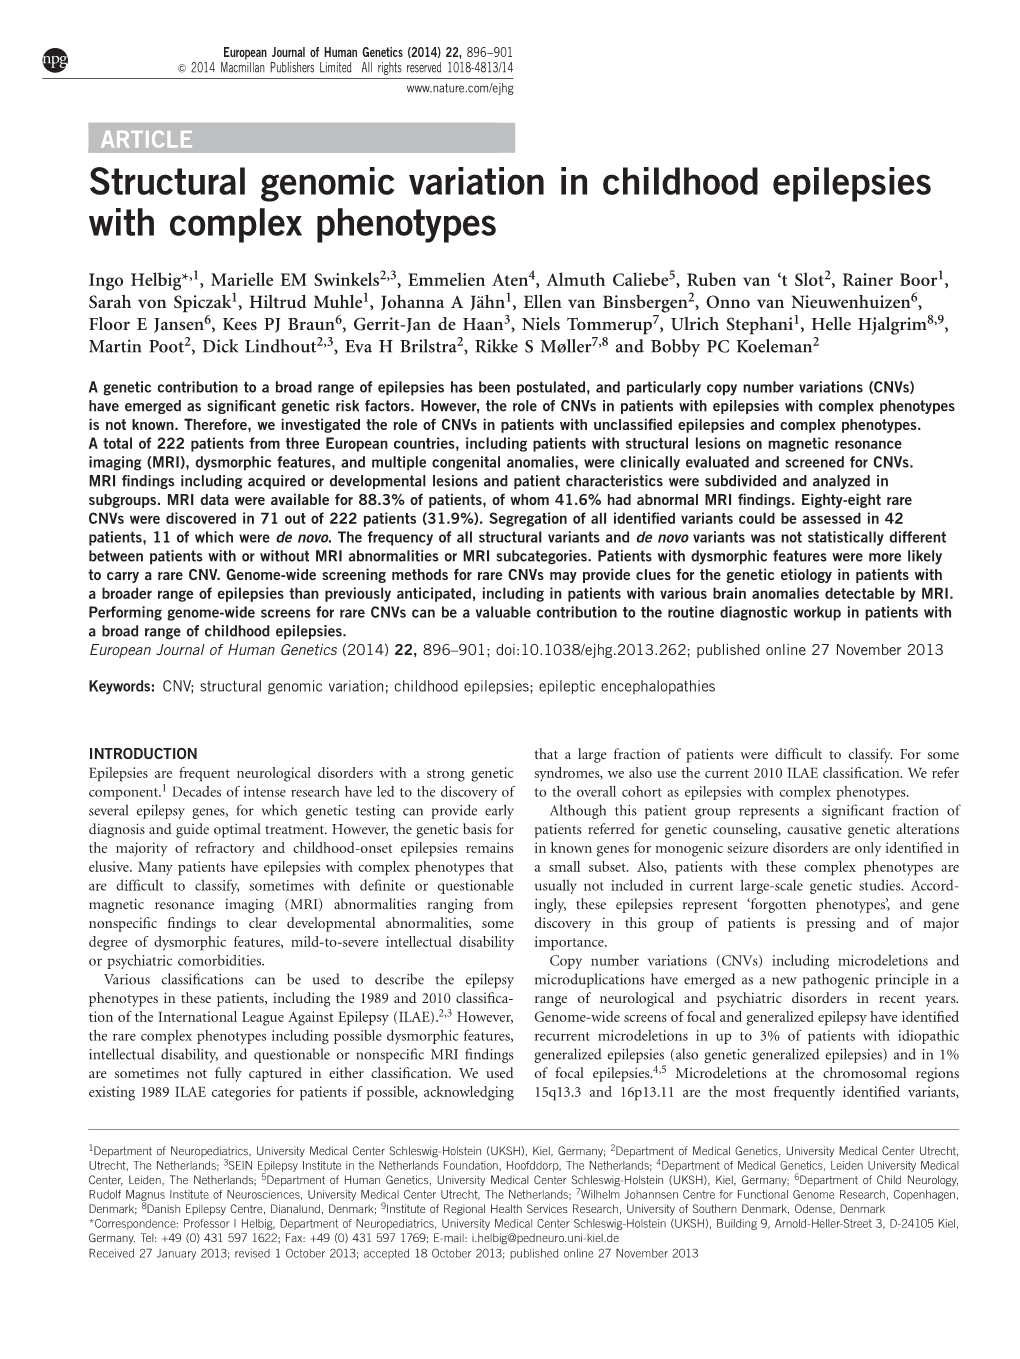 Structural Genomic Variation in Childhood Epilepsies with Complex Phenotypes